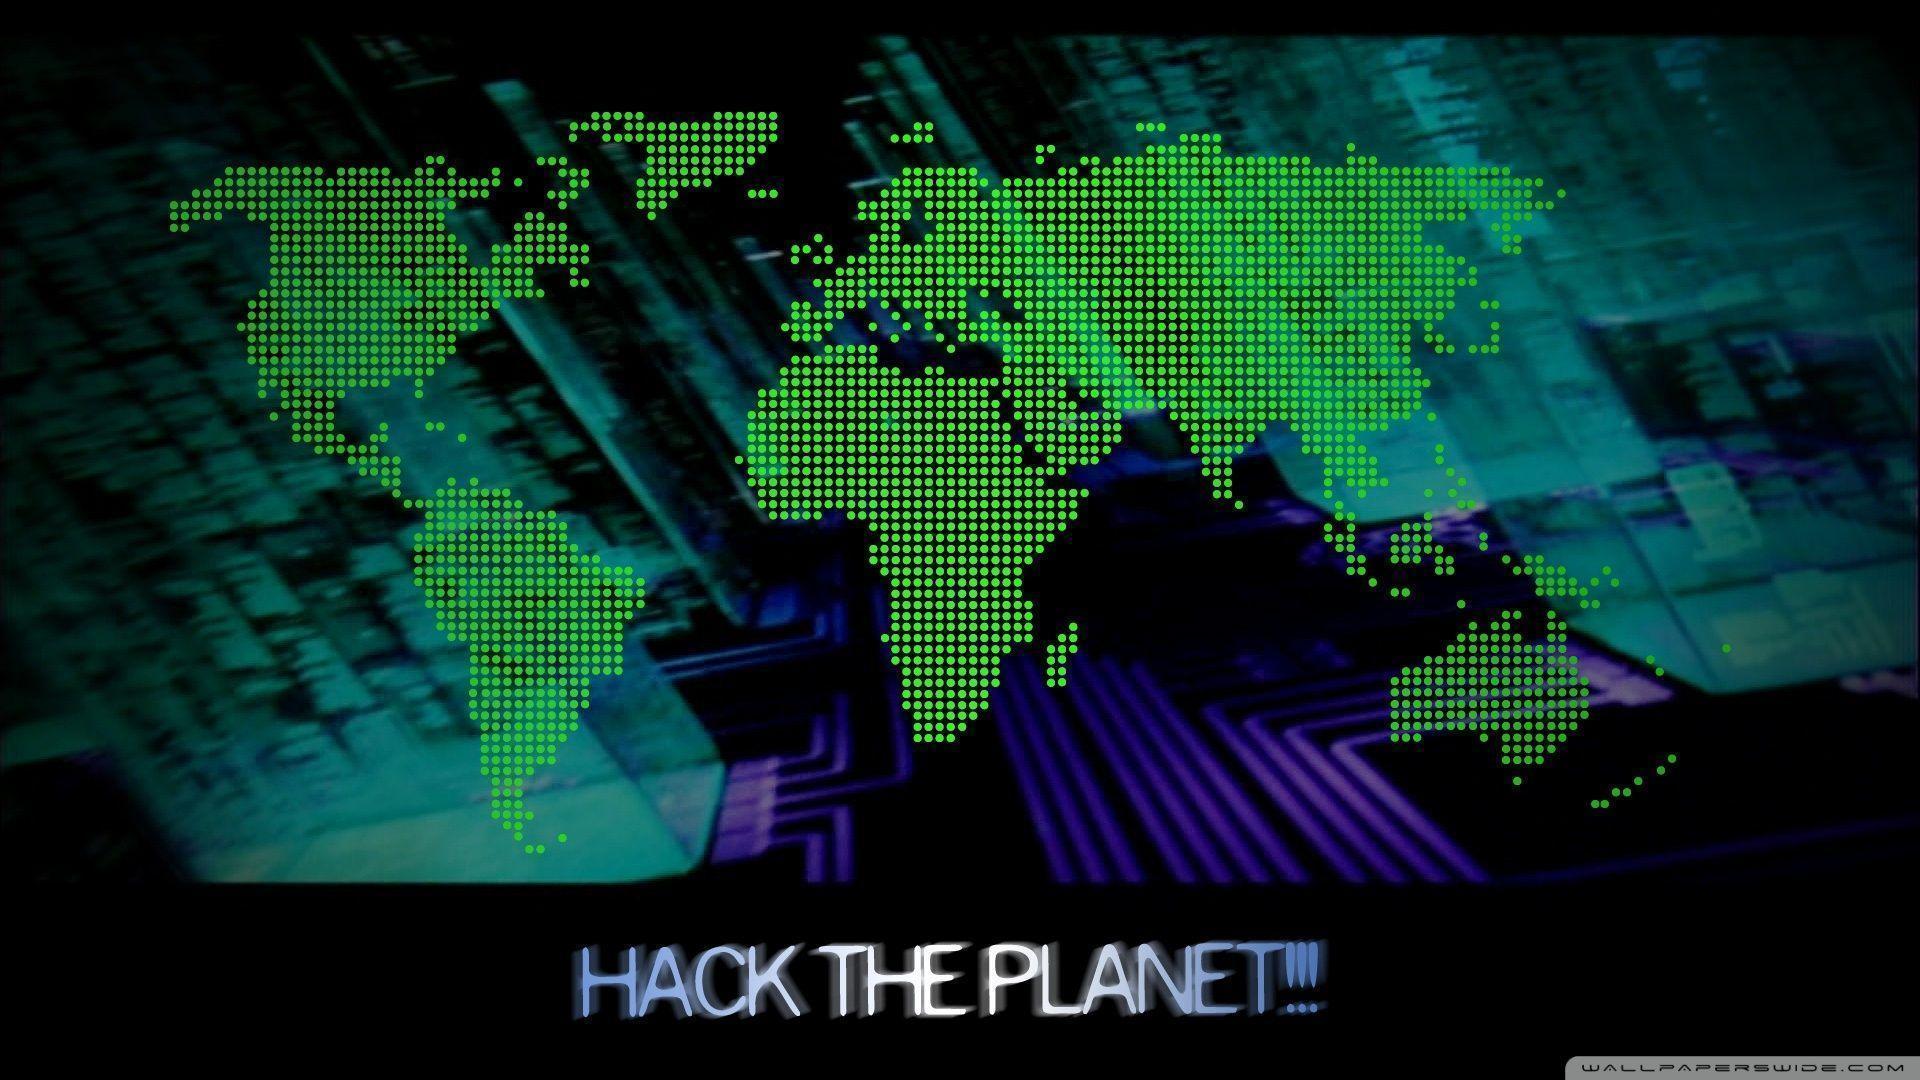 Hack the Planet HD desktop wallpaper, High Definition